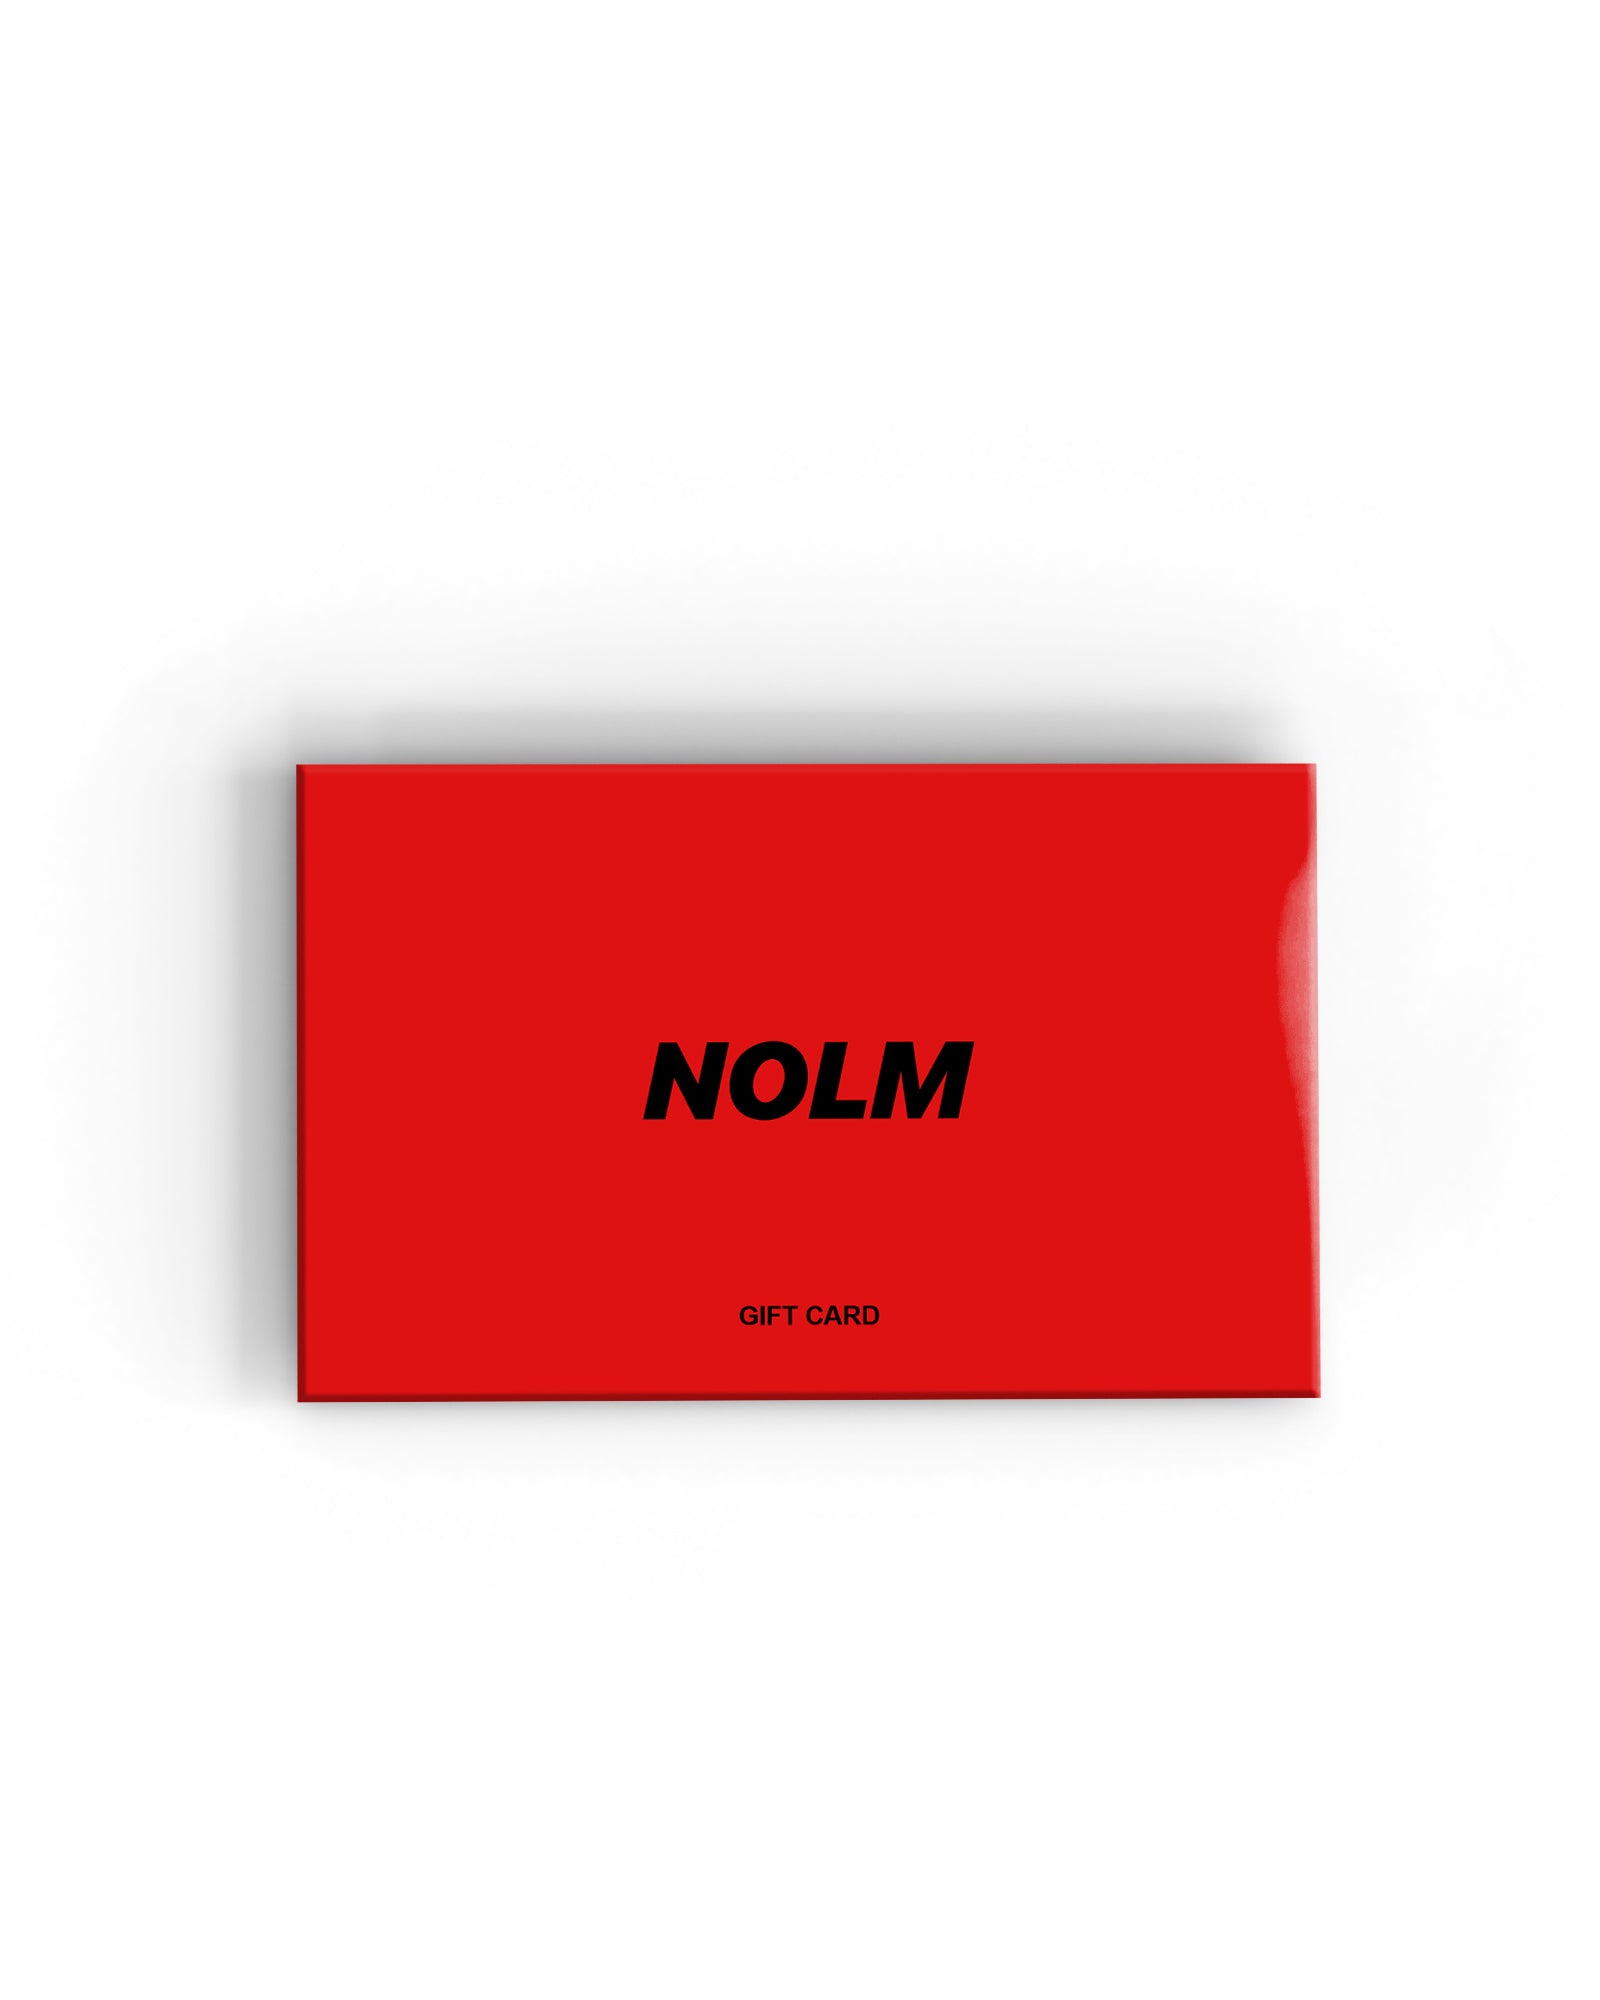 NOLM GIFT CARD